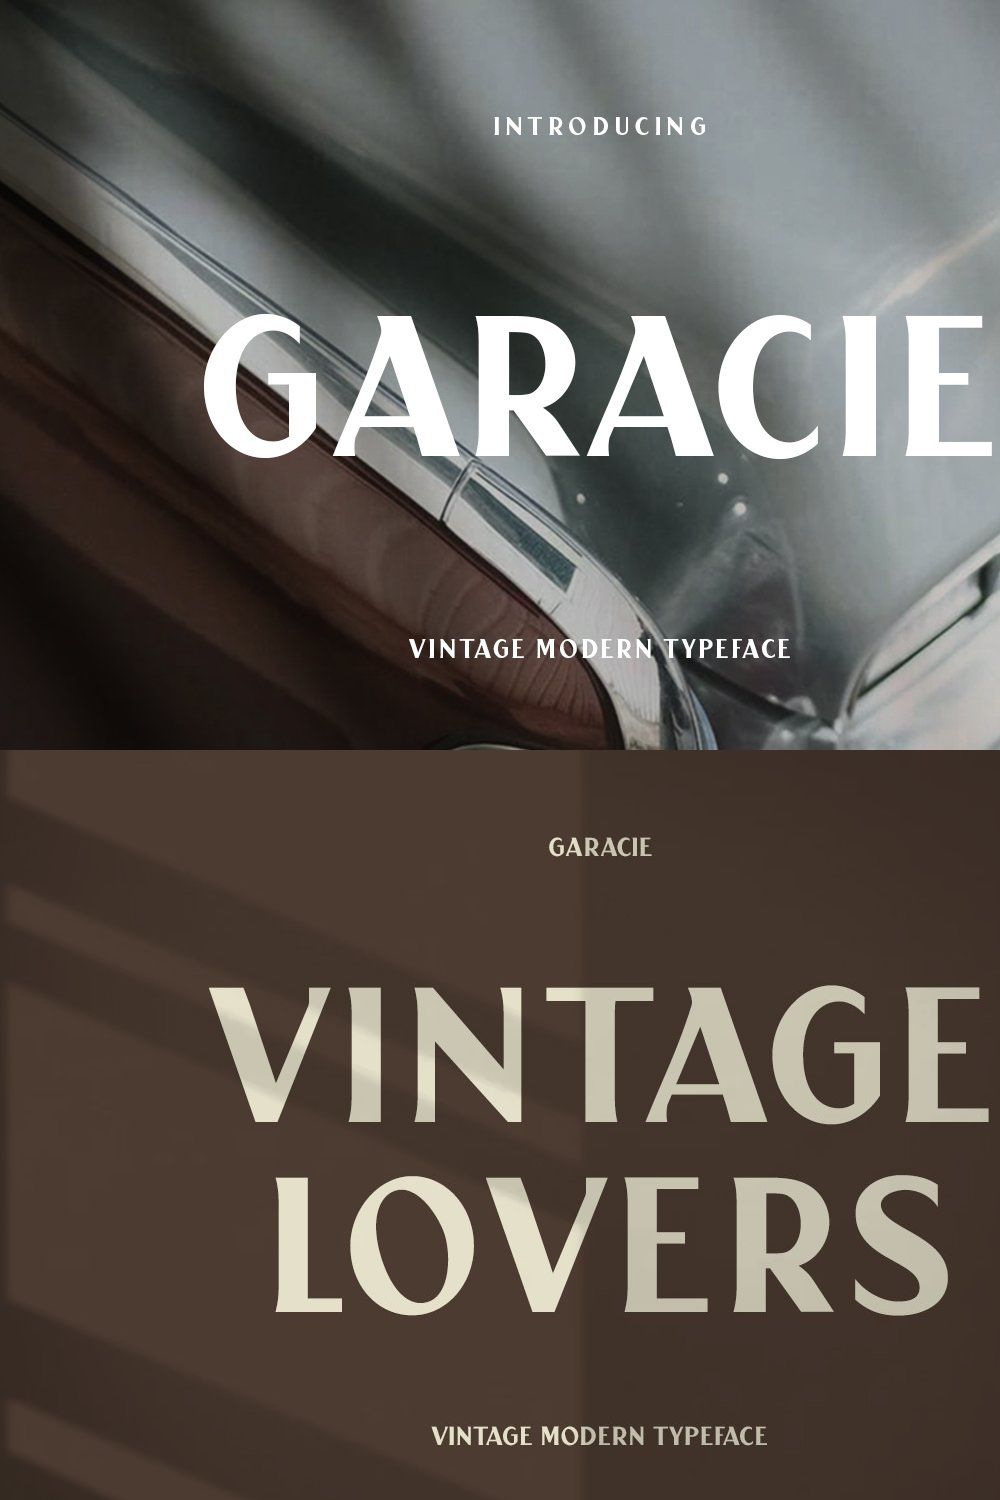 Garacie Vintage Modern Typeface pinterest preview image.